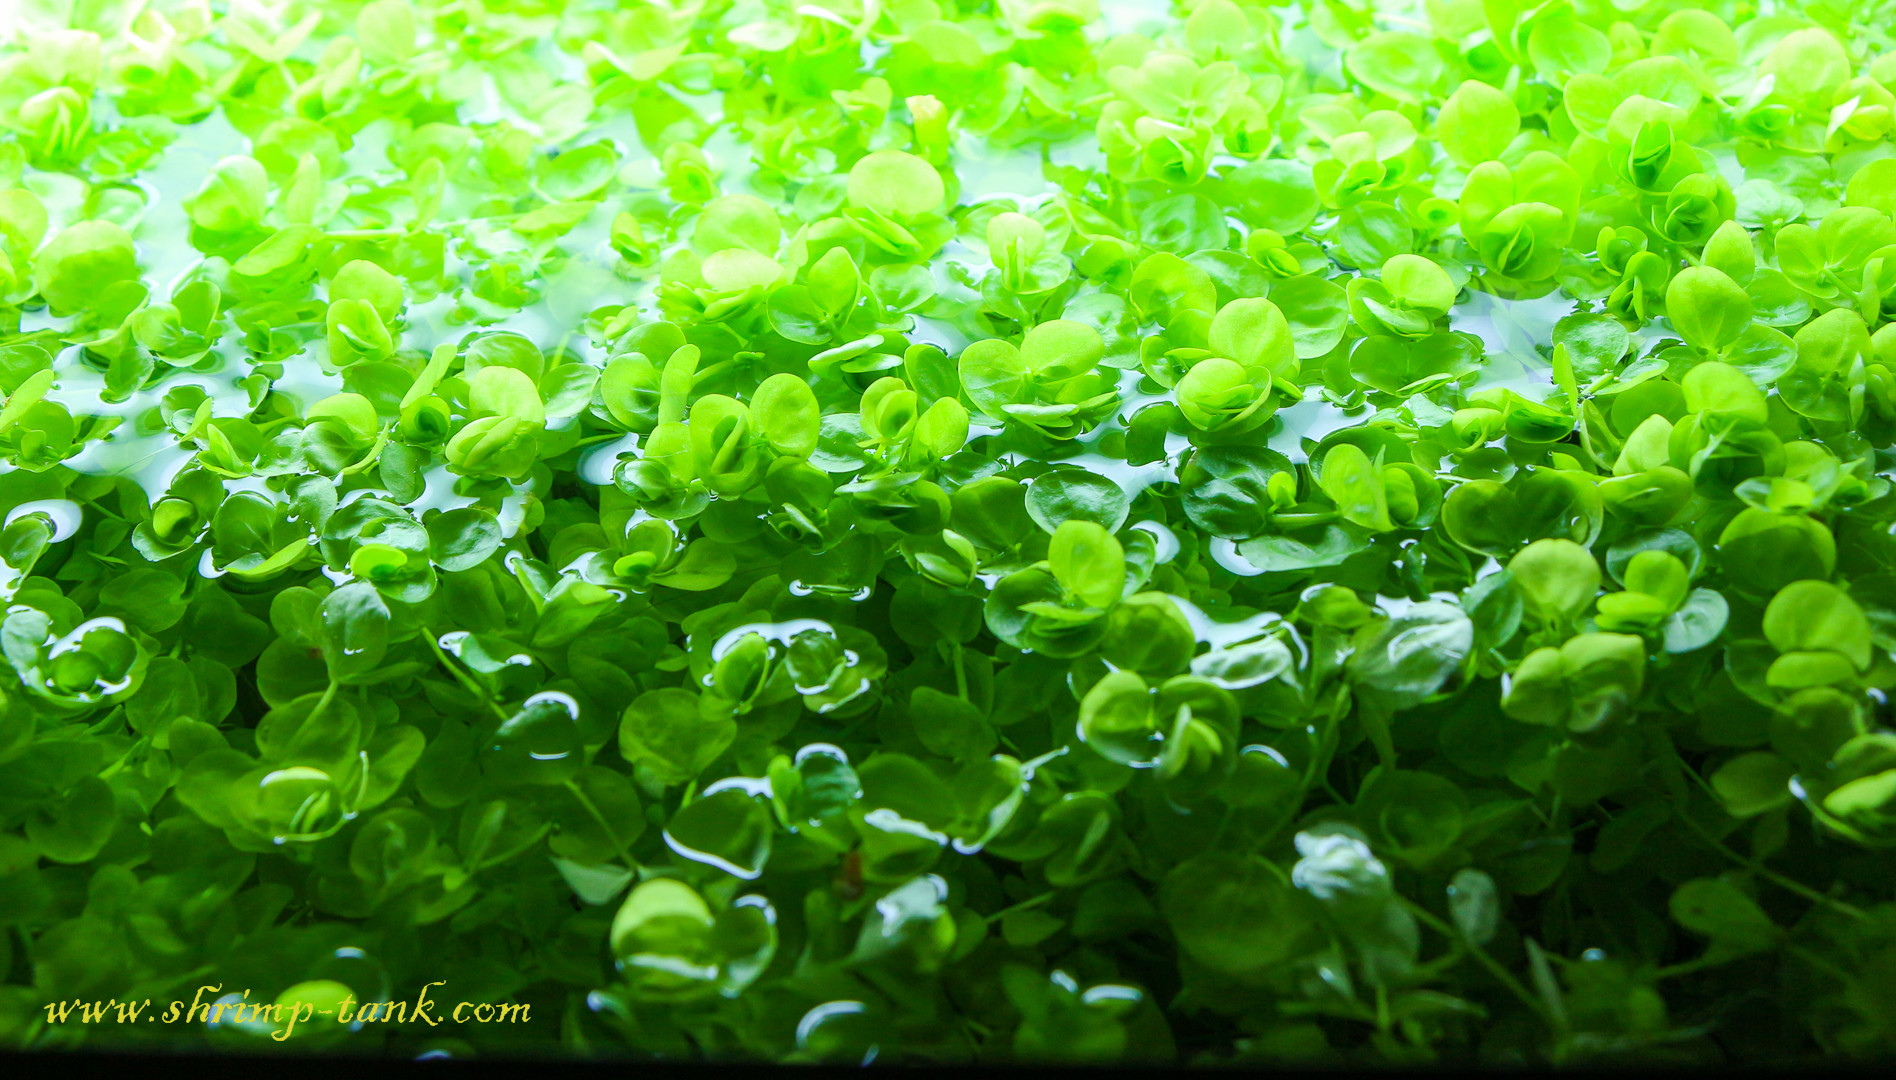 Best ideas about Baby Tears Plant Aquarium
. Save or Pin Baby tears aquarium plant Shrimp Tank Now.